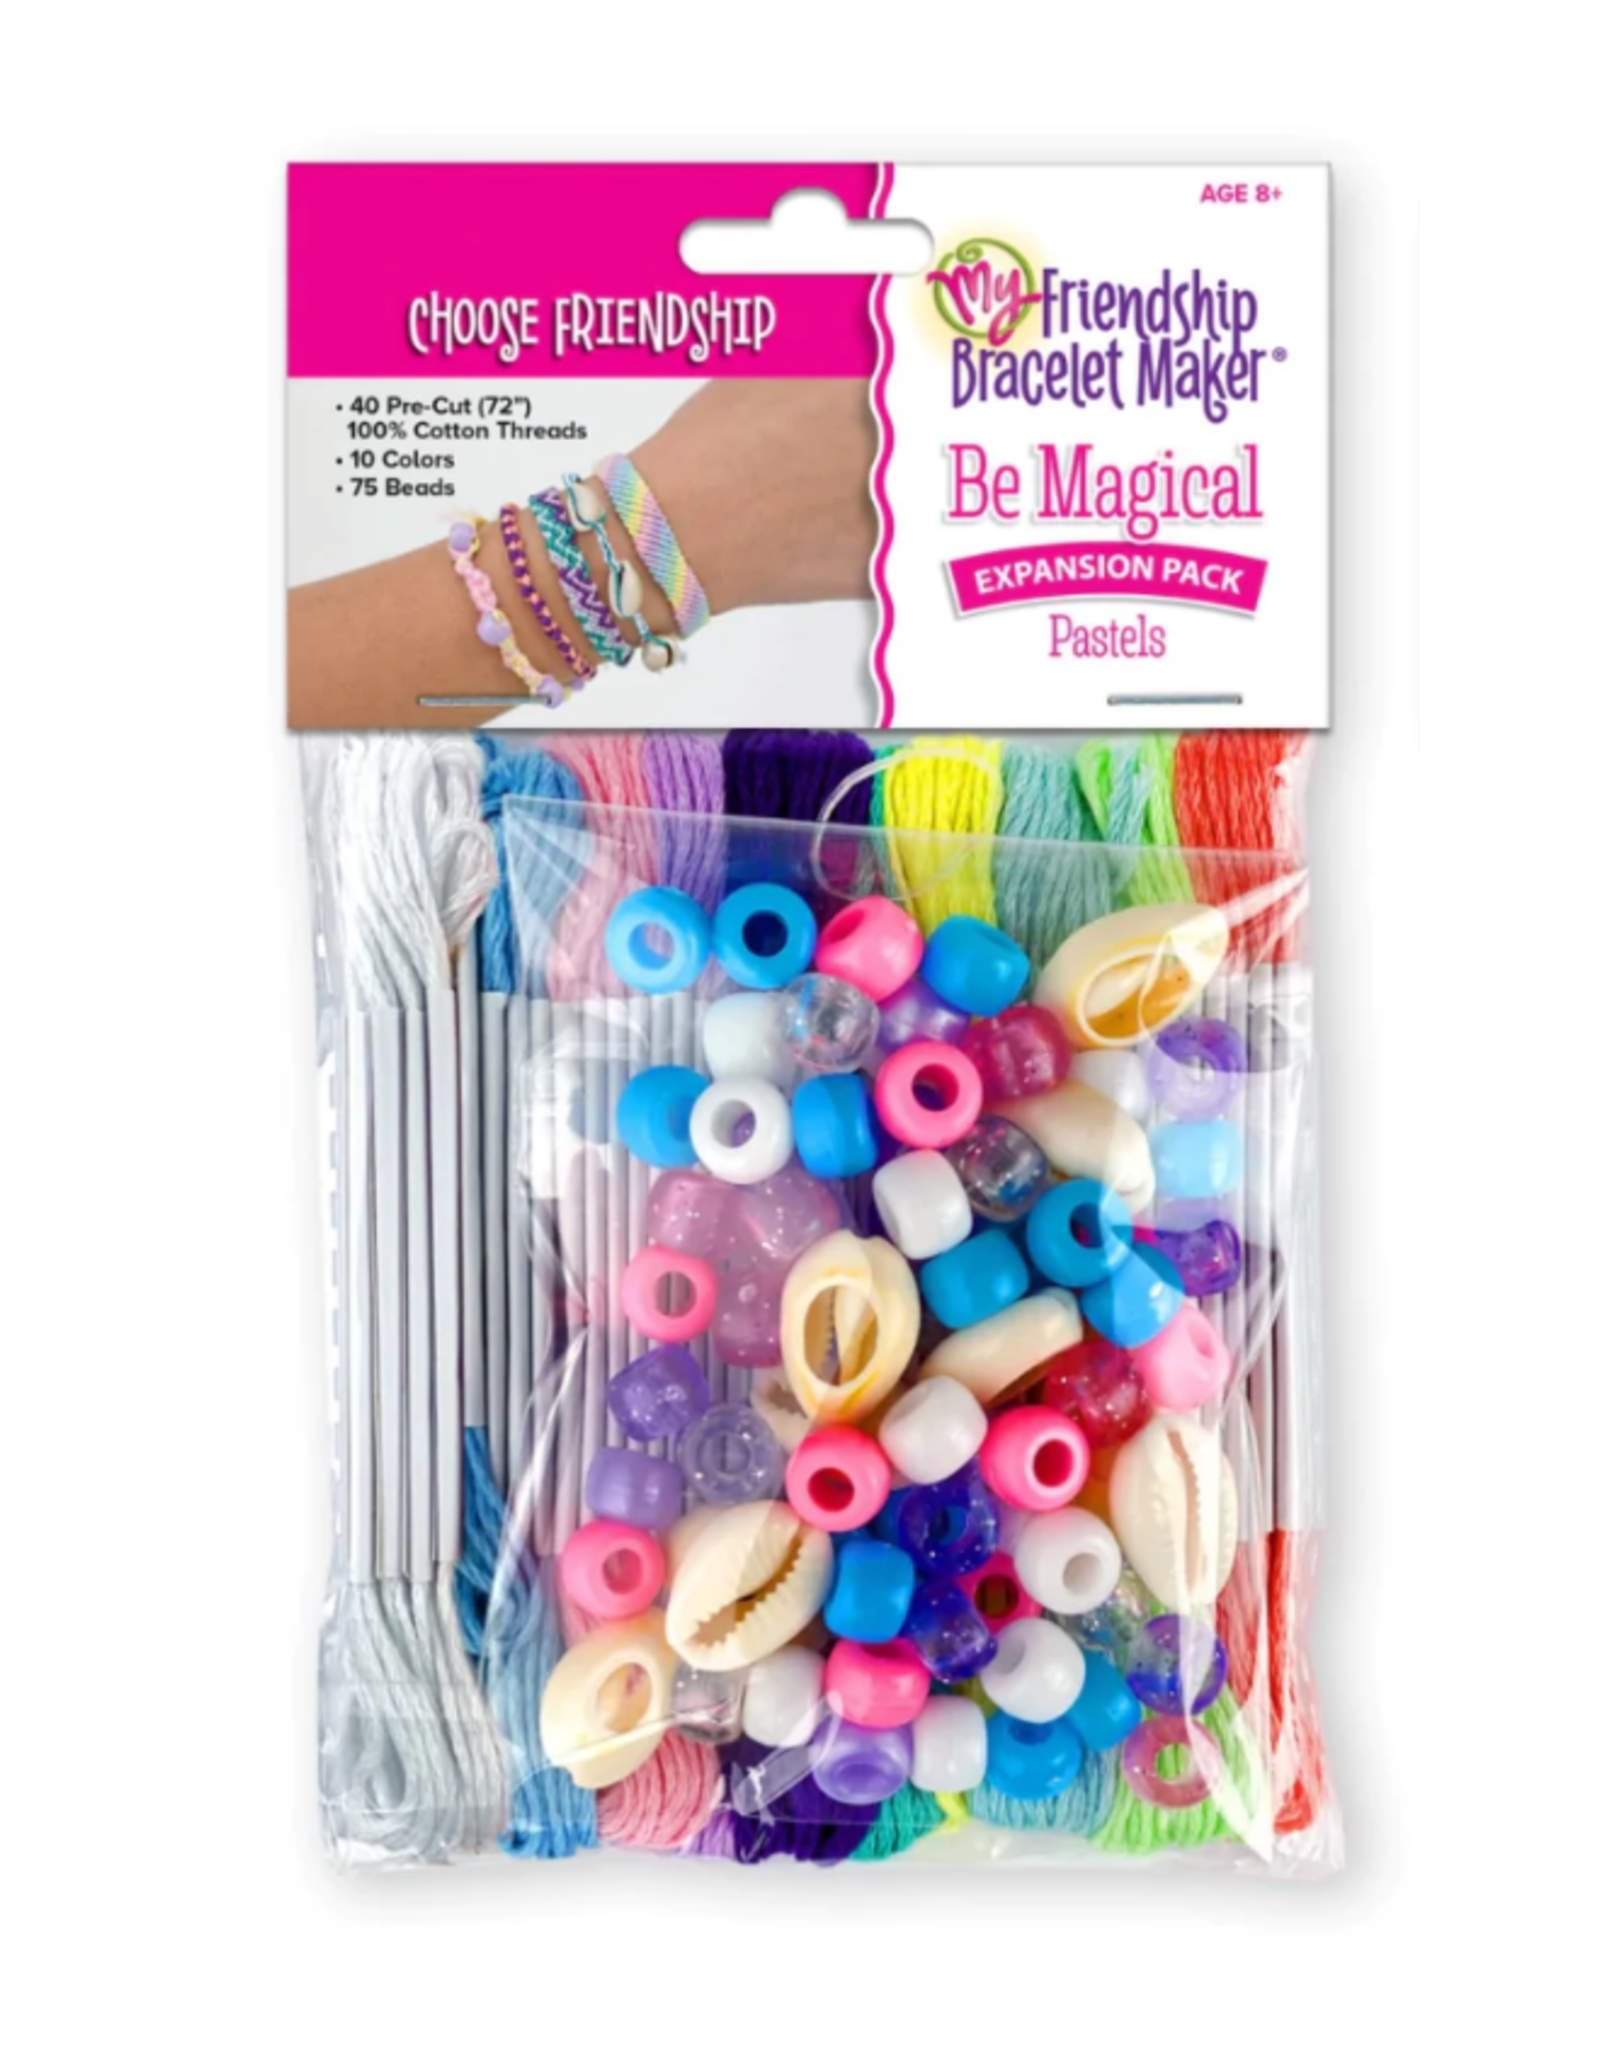 My Friendship Bracelet Maker Expansion Pack: Be Magical